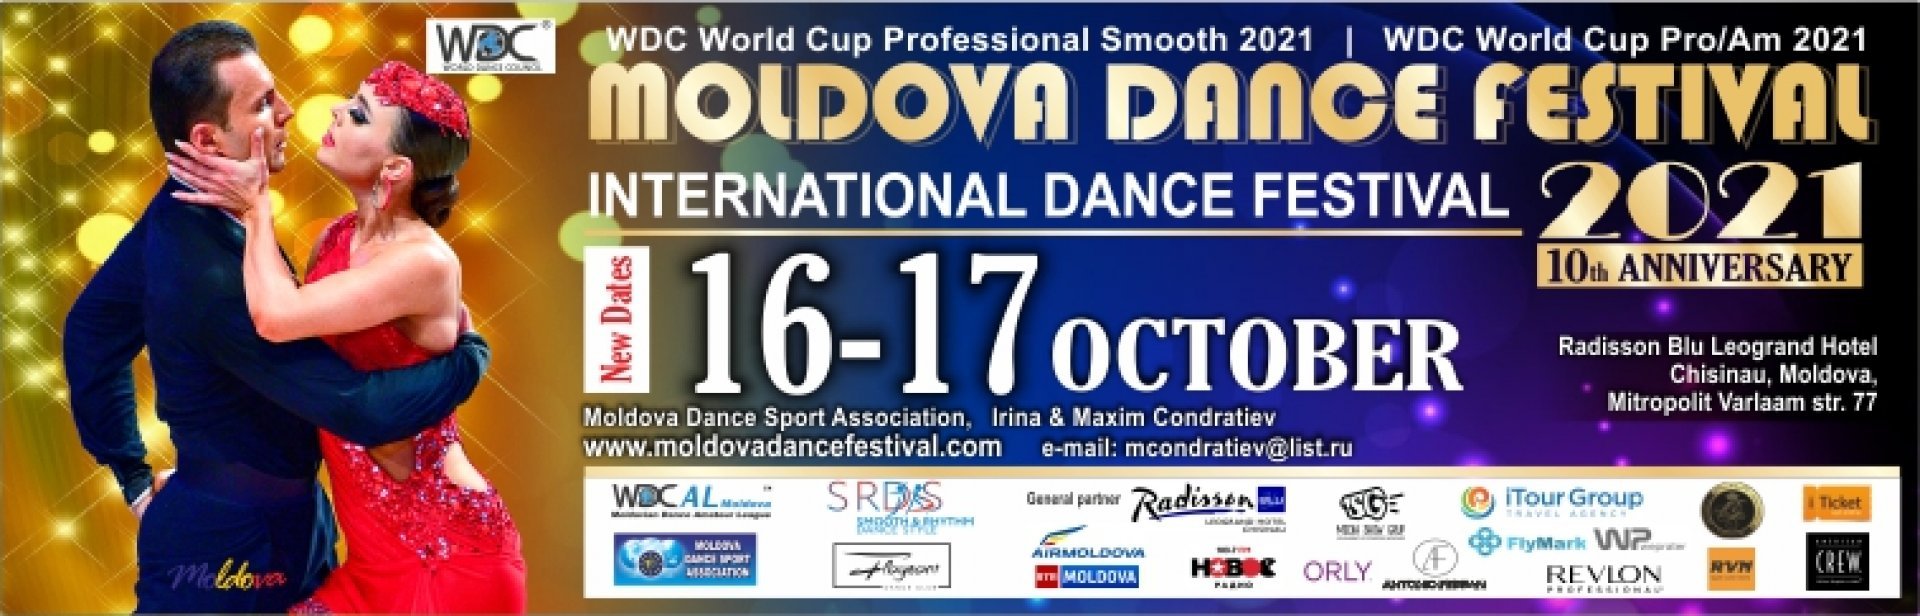 17 Octombrie 19:30-22:30 - Moldova Dance Festival 2021